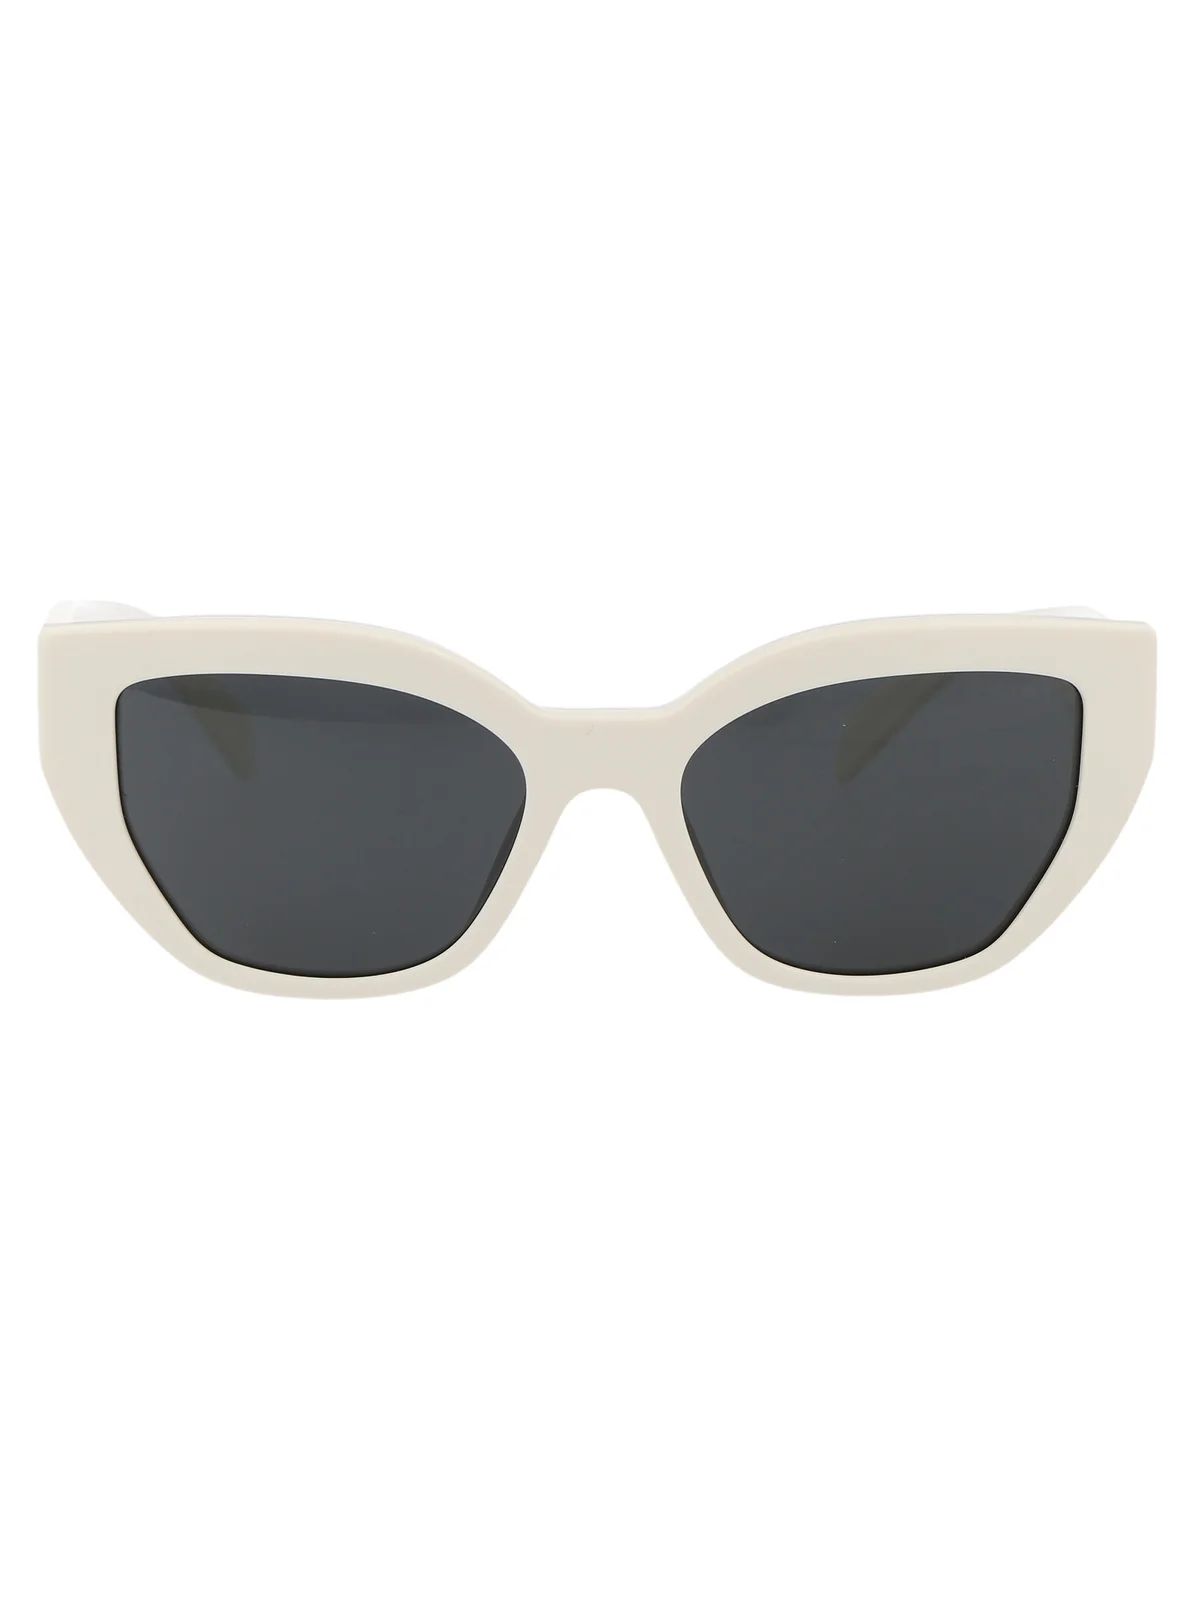 Prada Eyewear Butterfly Frame Sunglasses | Cettire Global